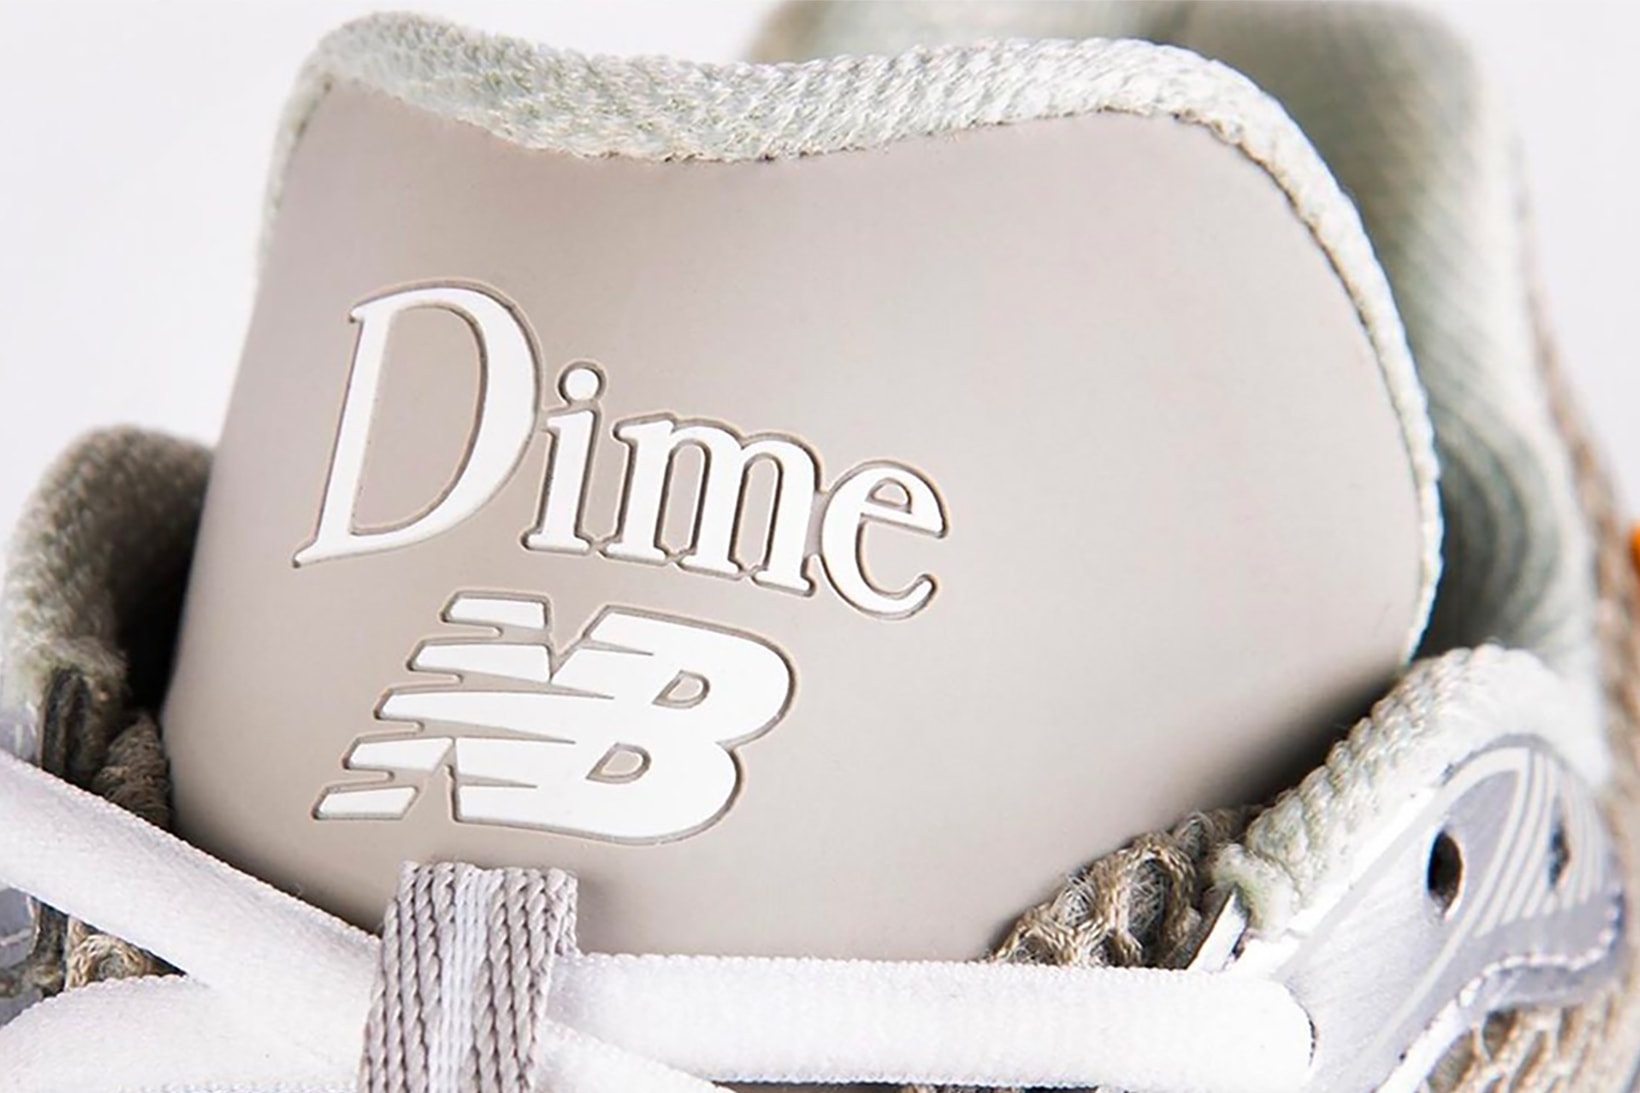 dime new balance collaboration sneakers cream gray teaser sneak peek sneakerhead shoes footwear